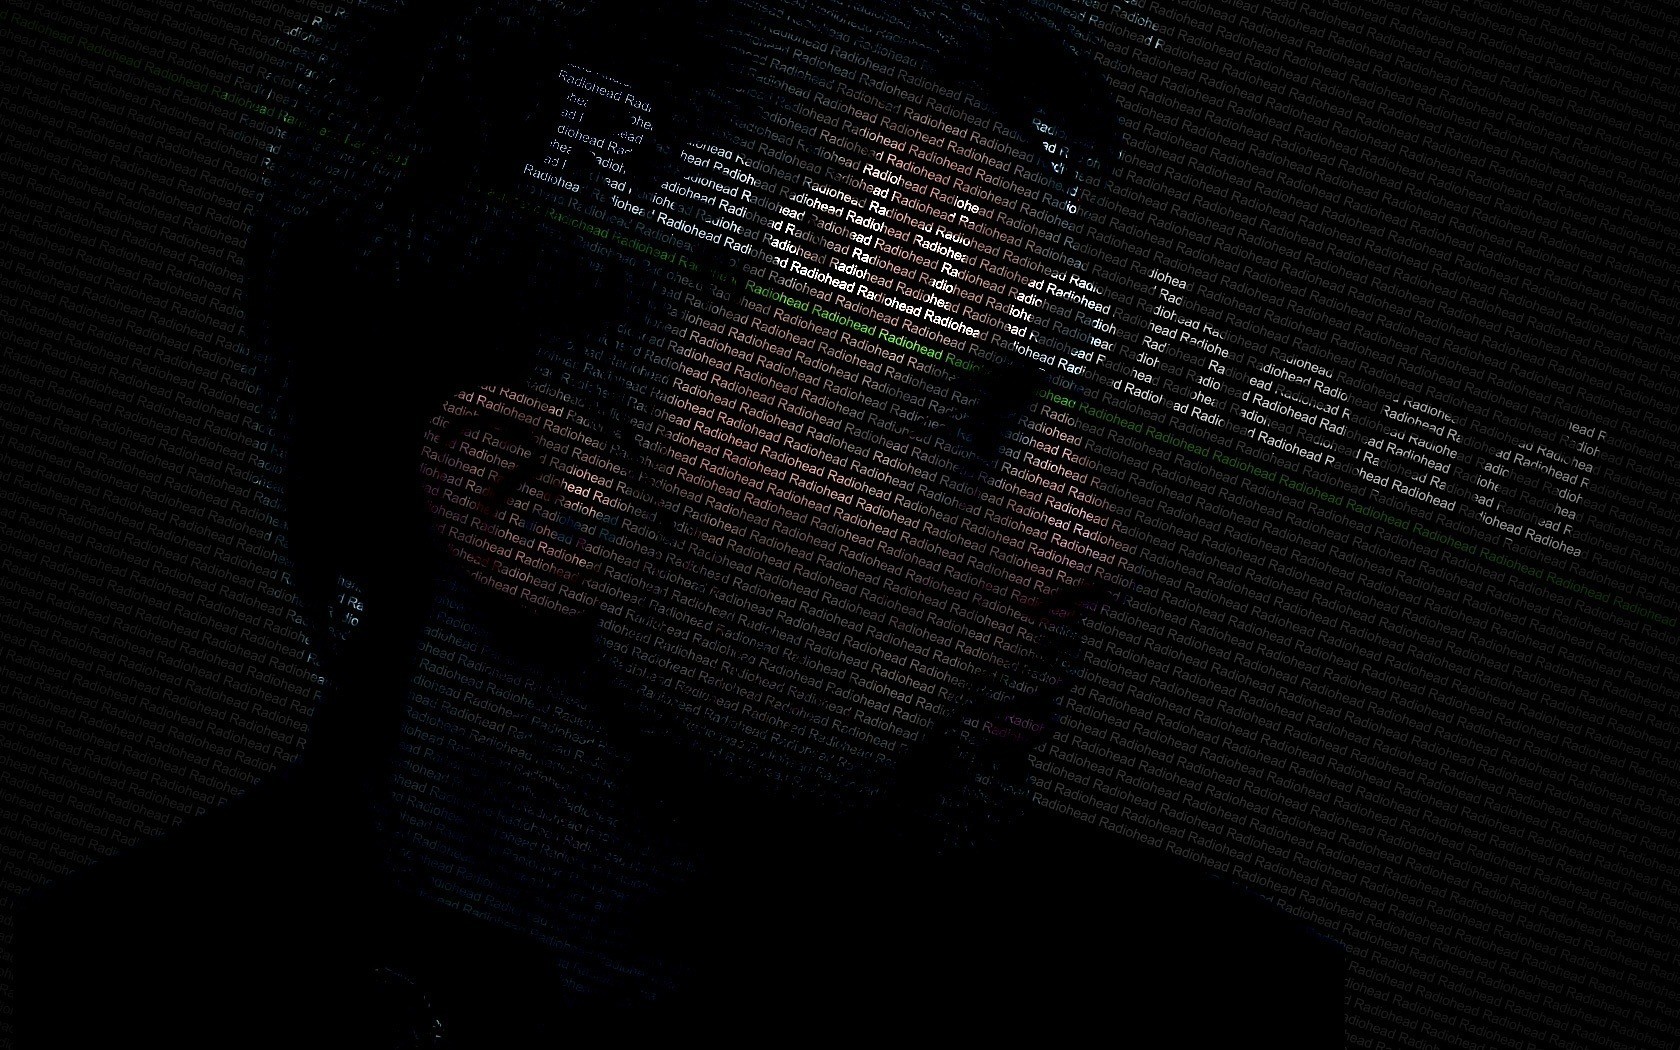 Music Radiohead HD Wallpaper | Background Image